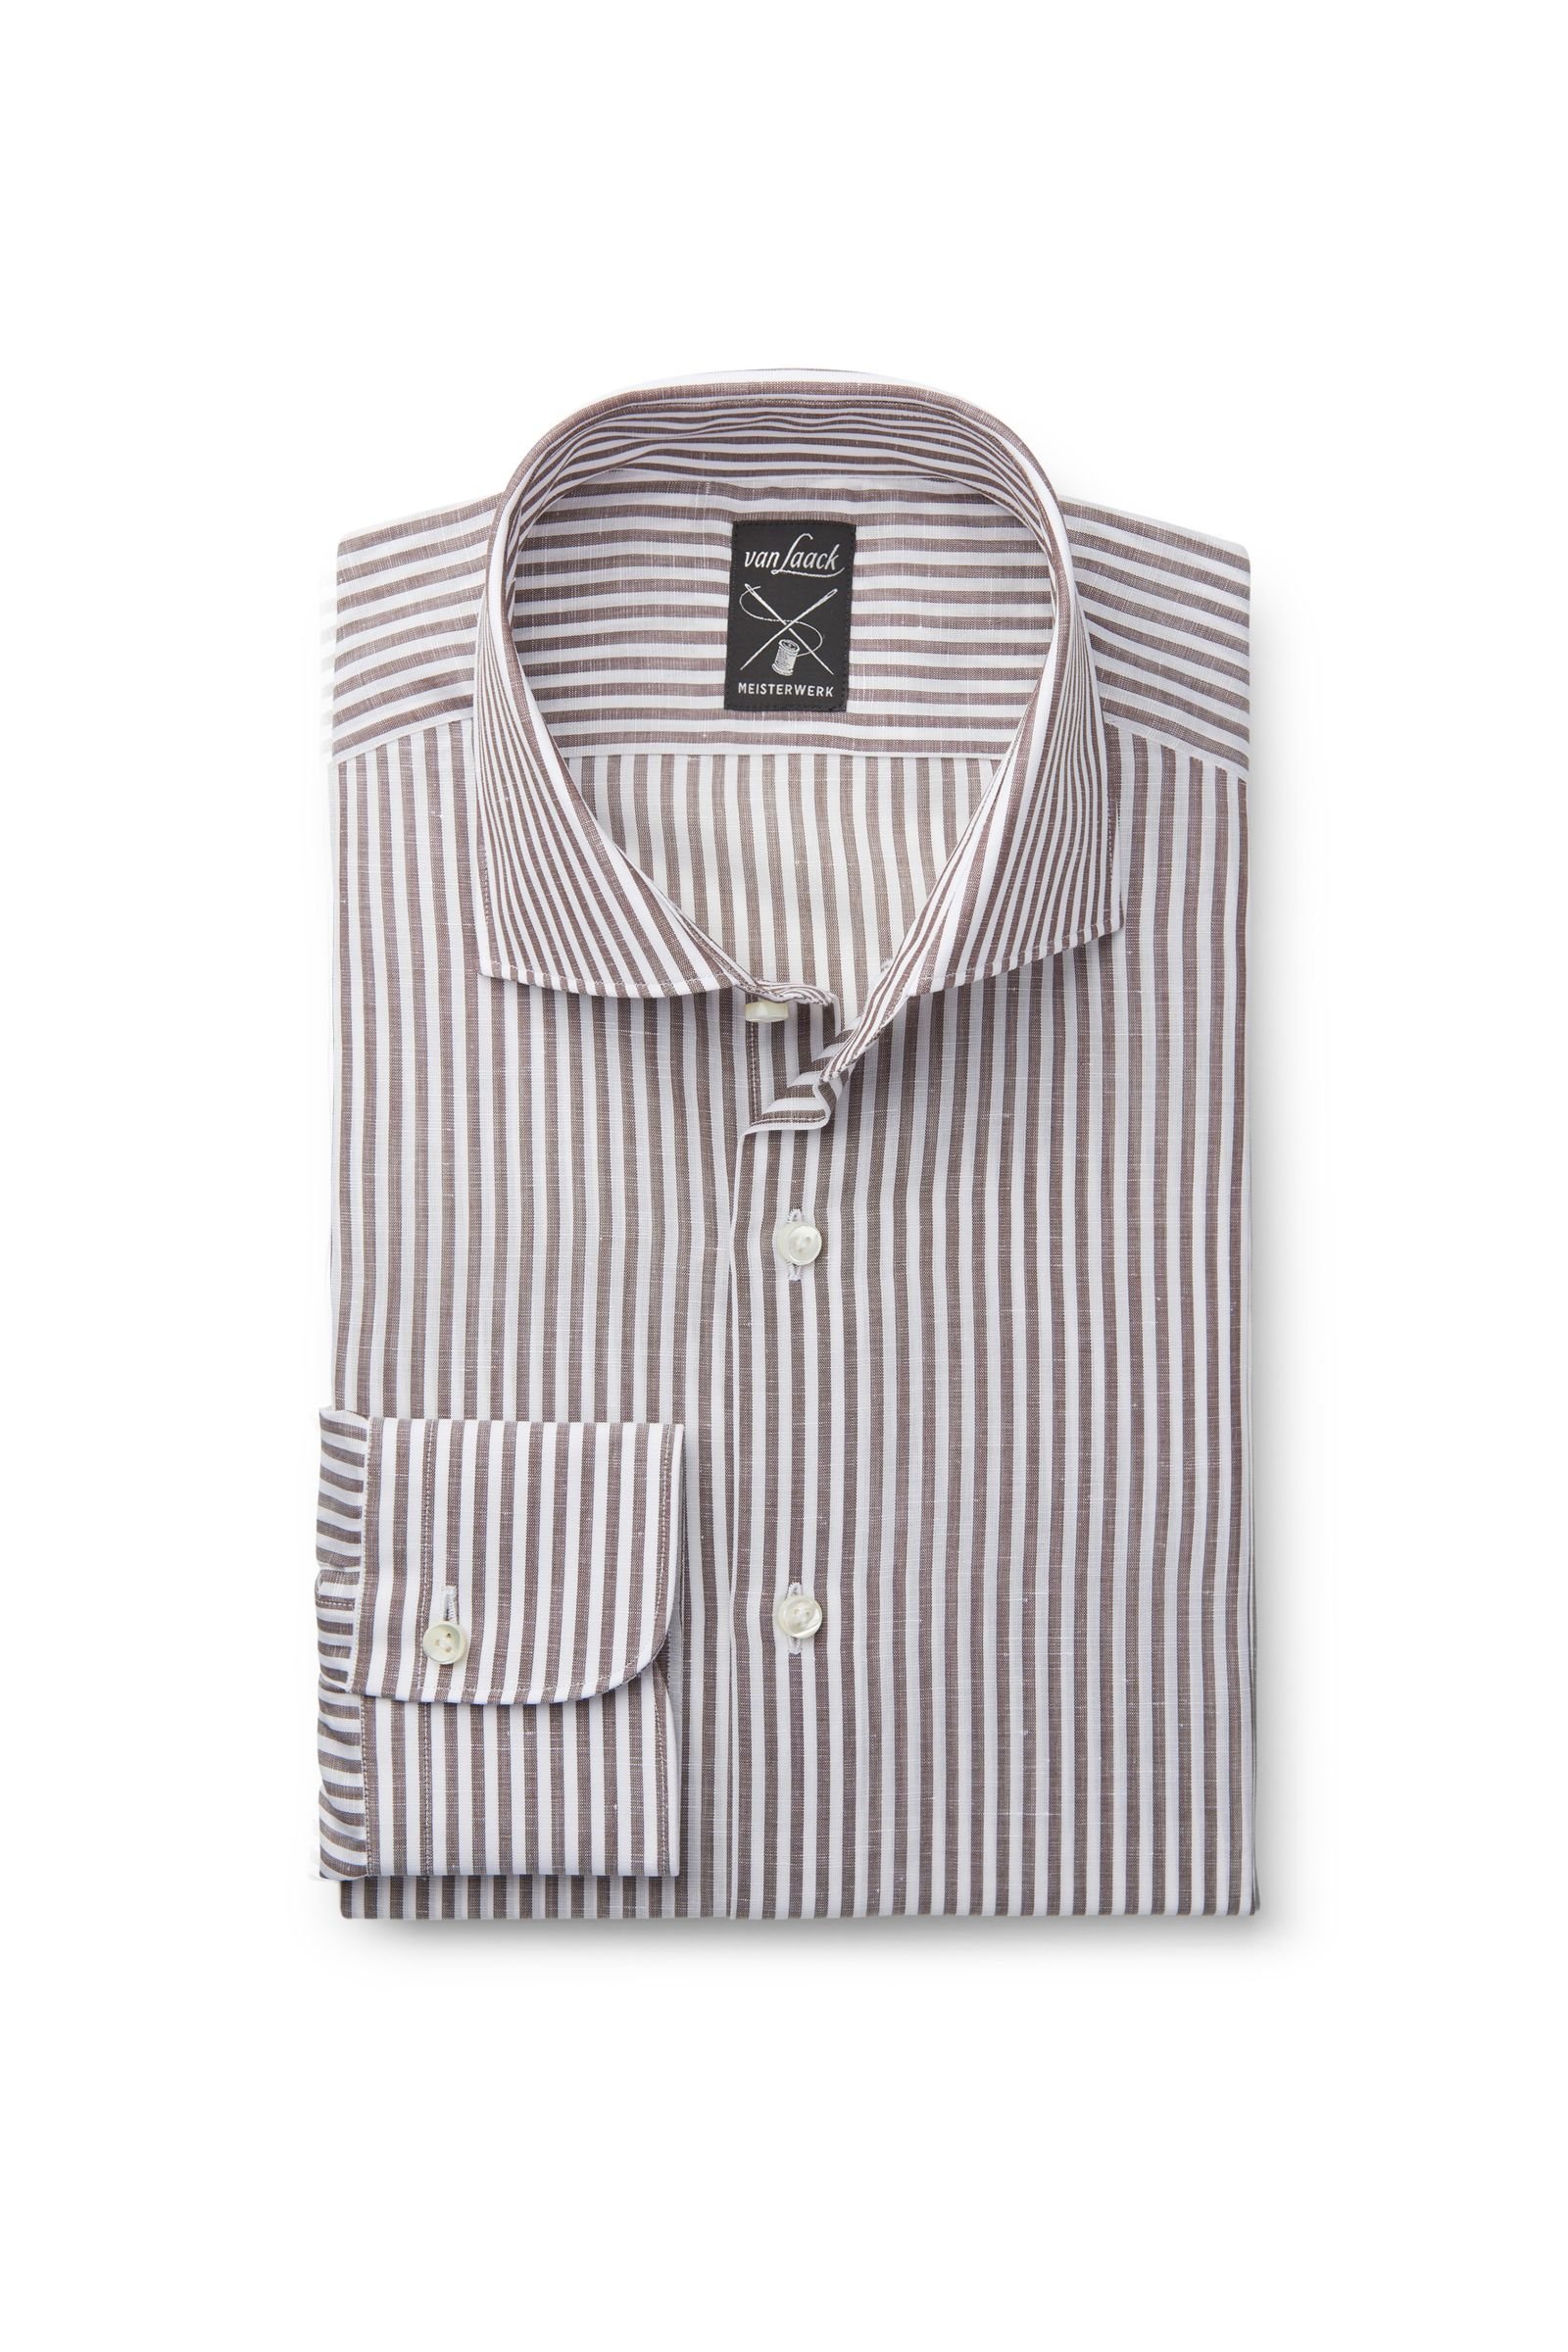 Business shirt 'Mivara Tailor Fit' shark collar brown striped